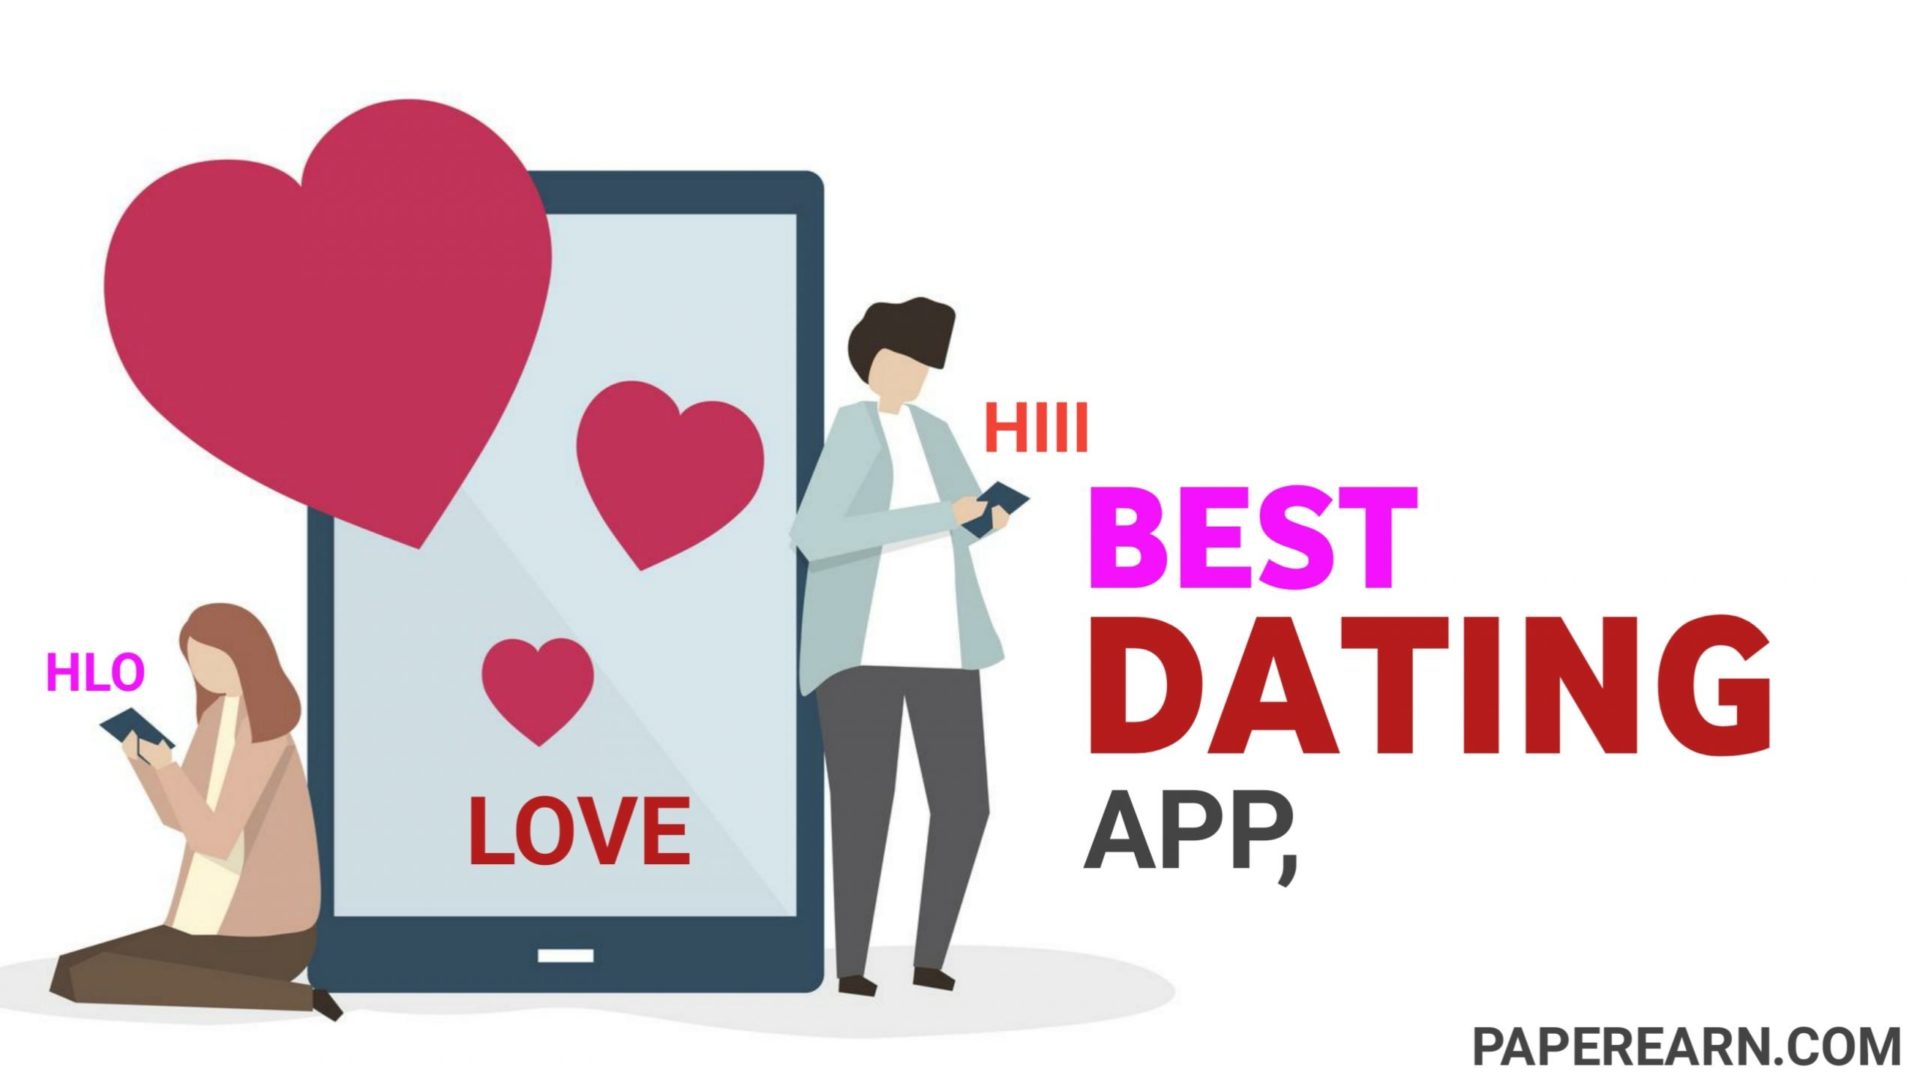 BestSmmPanel Meet Individuals Through Online Dating Sites Free Best Online Dating App scaled 1